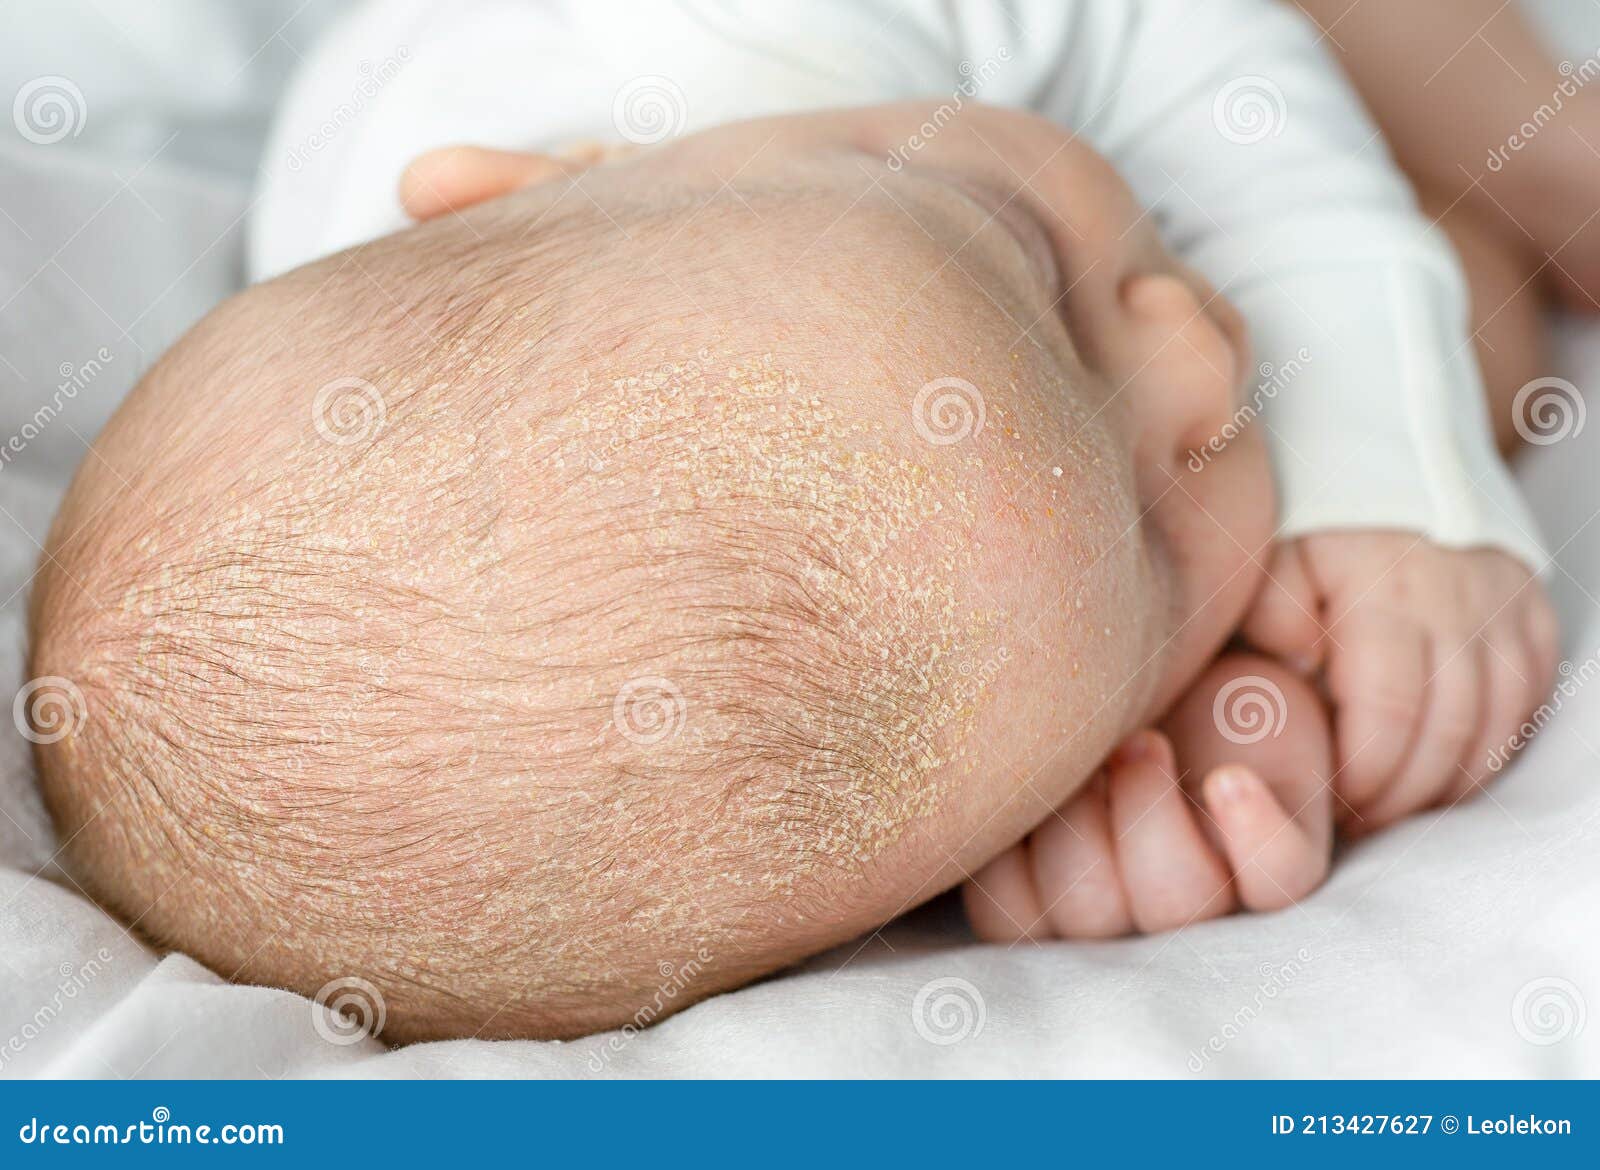 seborrheic dermatitis crusts on the baby`s head. child with seborrhea in the hair